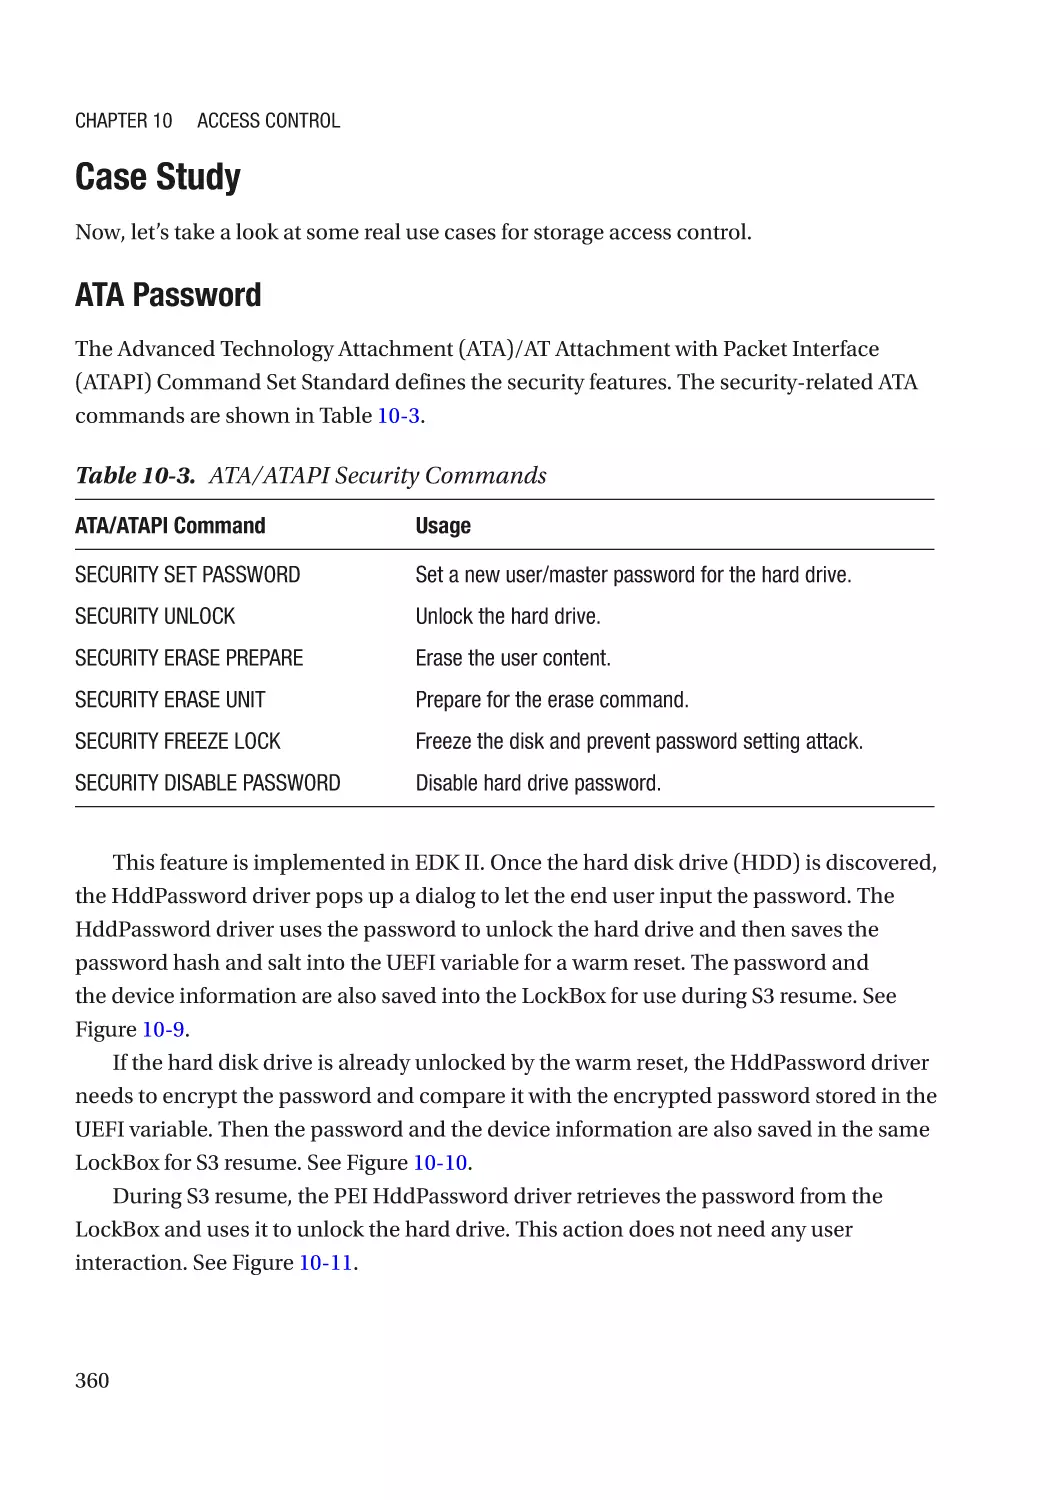 Case Study
ATA Password